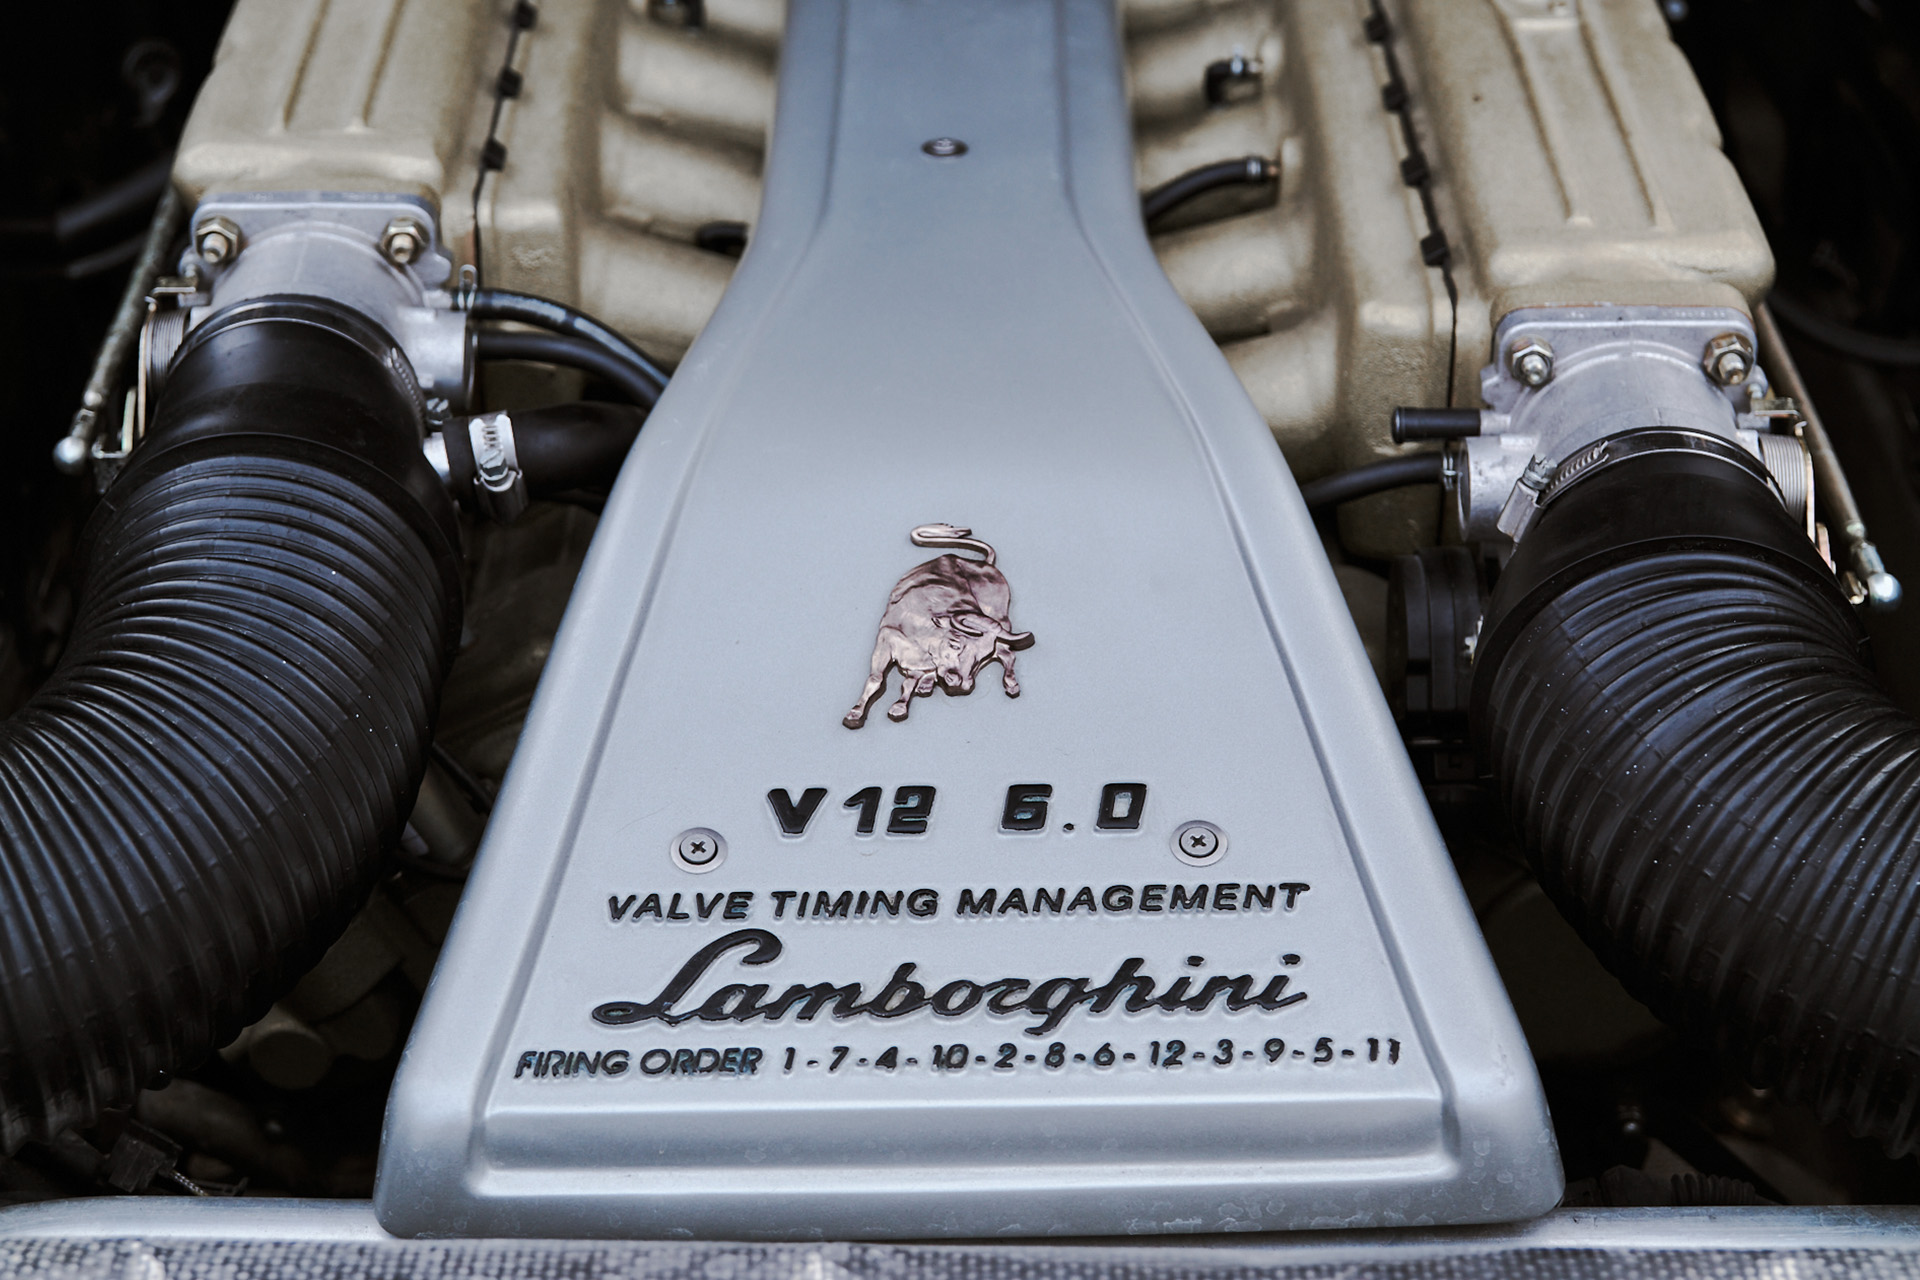 Are all Lamborghinis naturally aspirated?